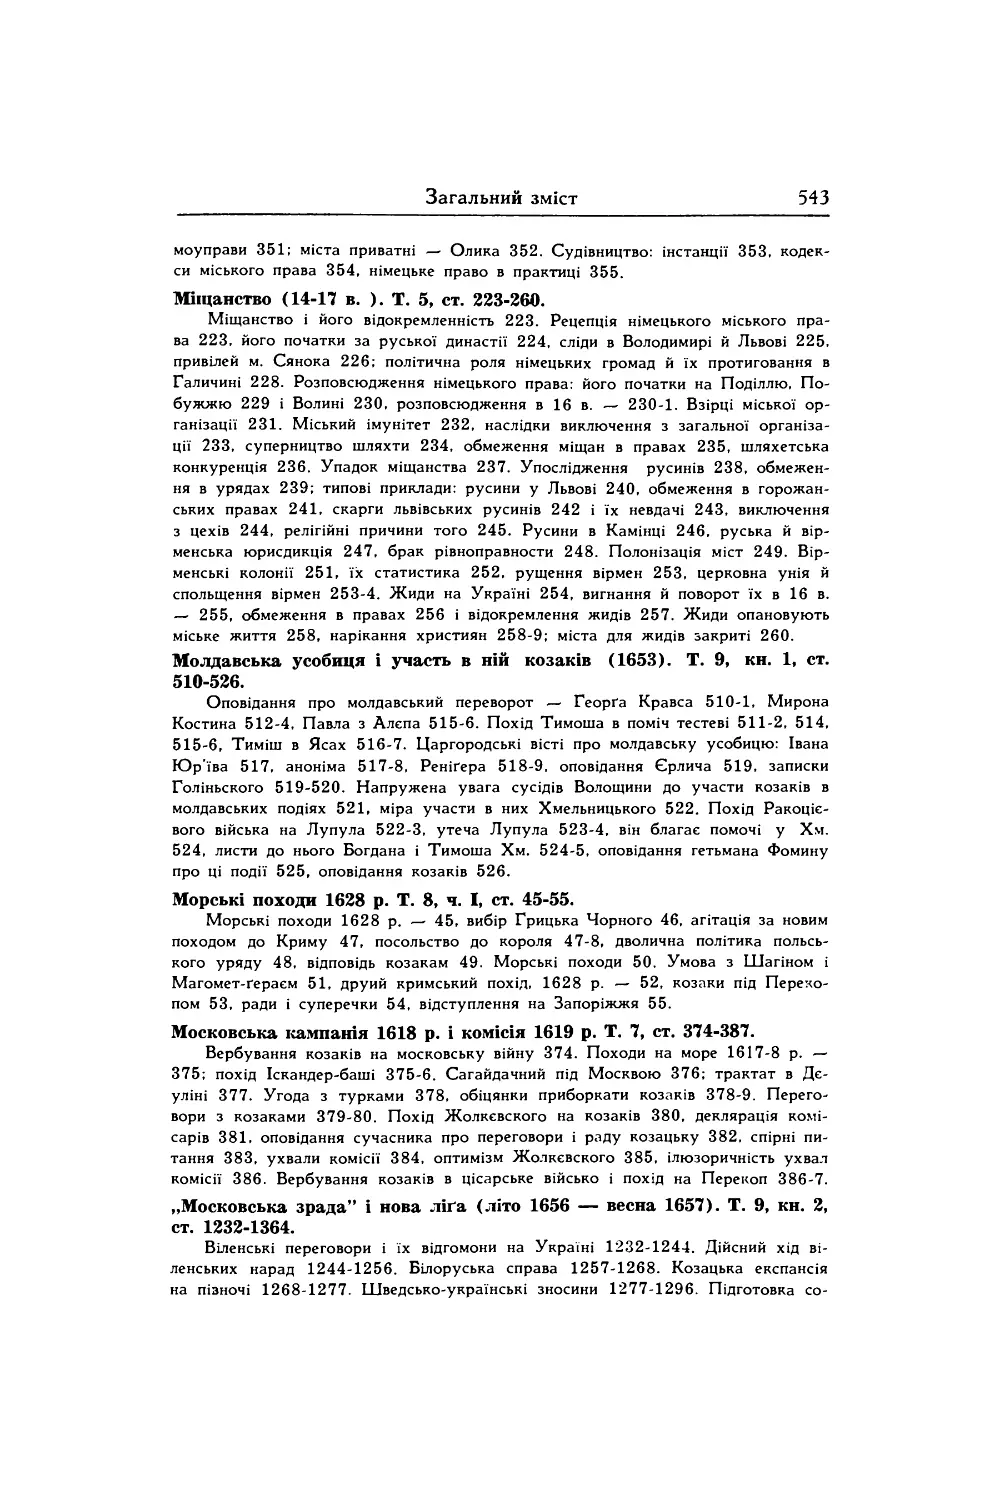 Морські походи 1628 p. Т. 8, ч. І, ст. 45-55.
Московська кампанія 1618 р. і комісія 1619 p. Т. 7, ст. 374-387.